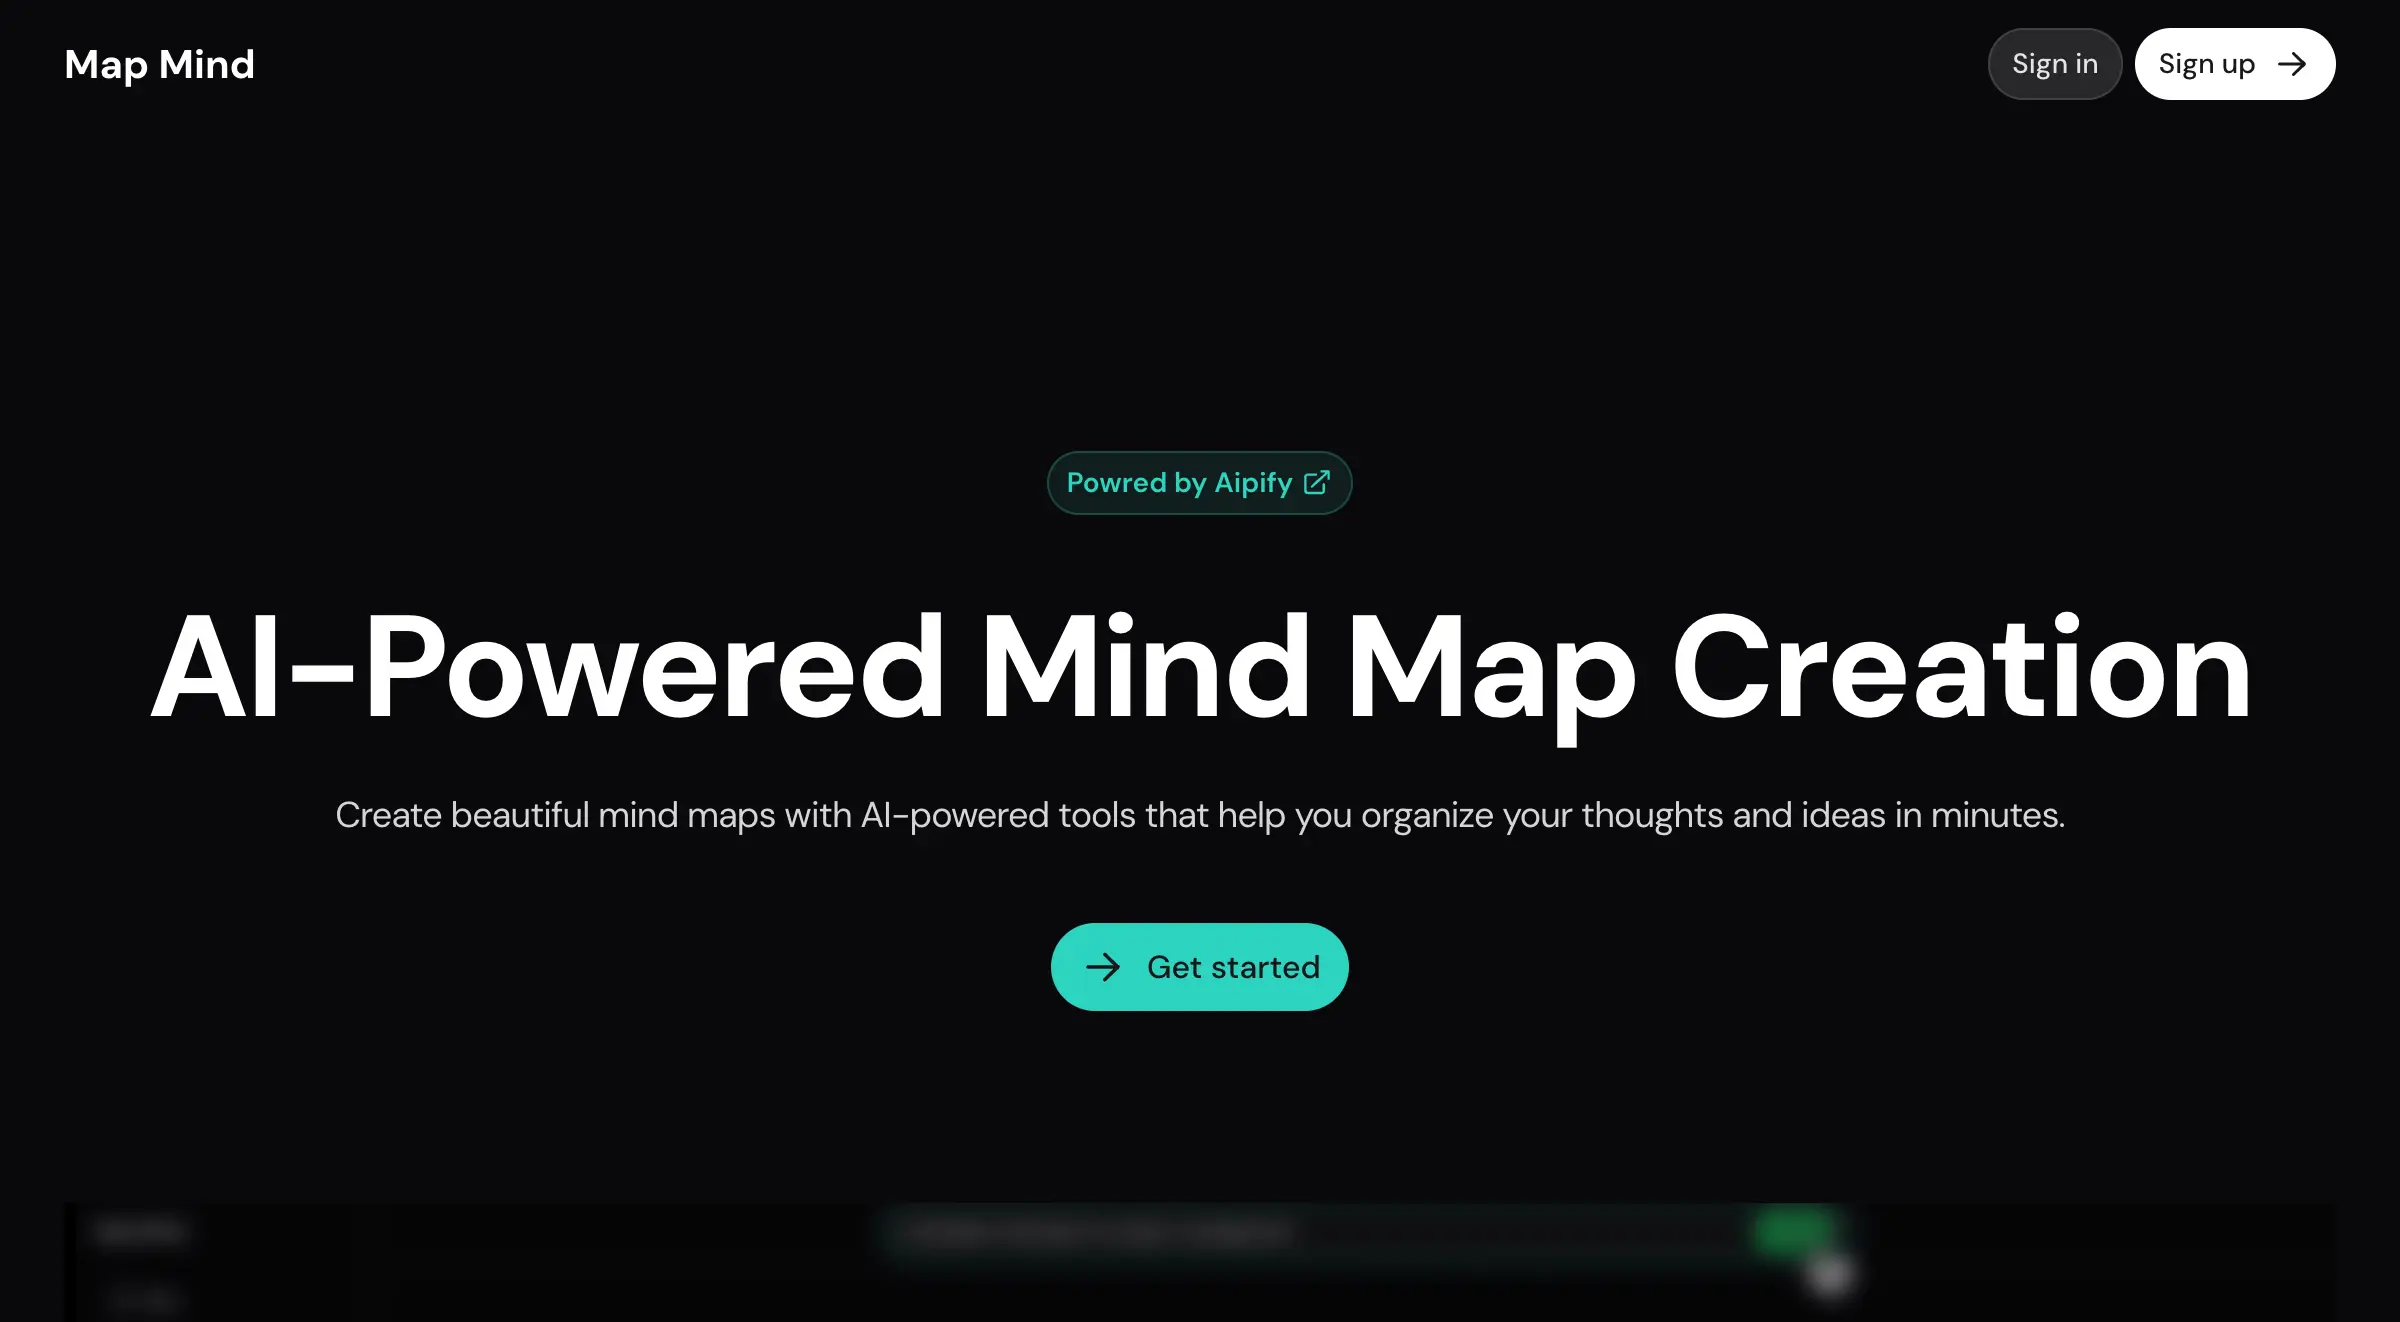 Map Mind - AI-Powered Mind Map Creation